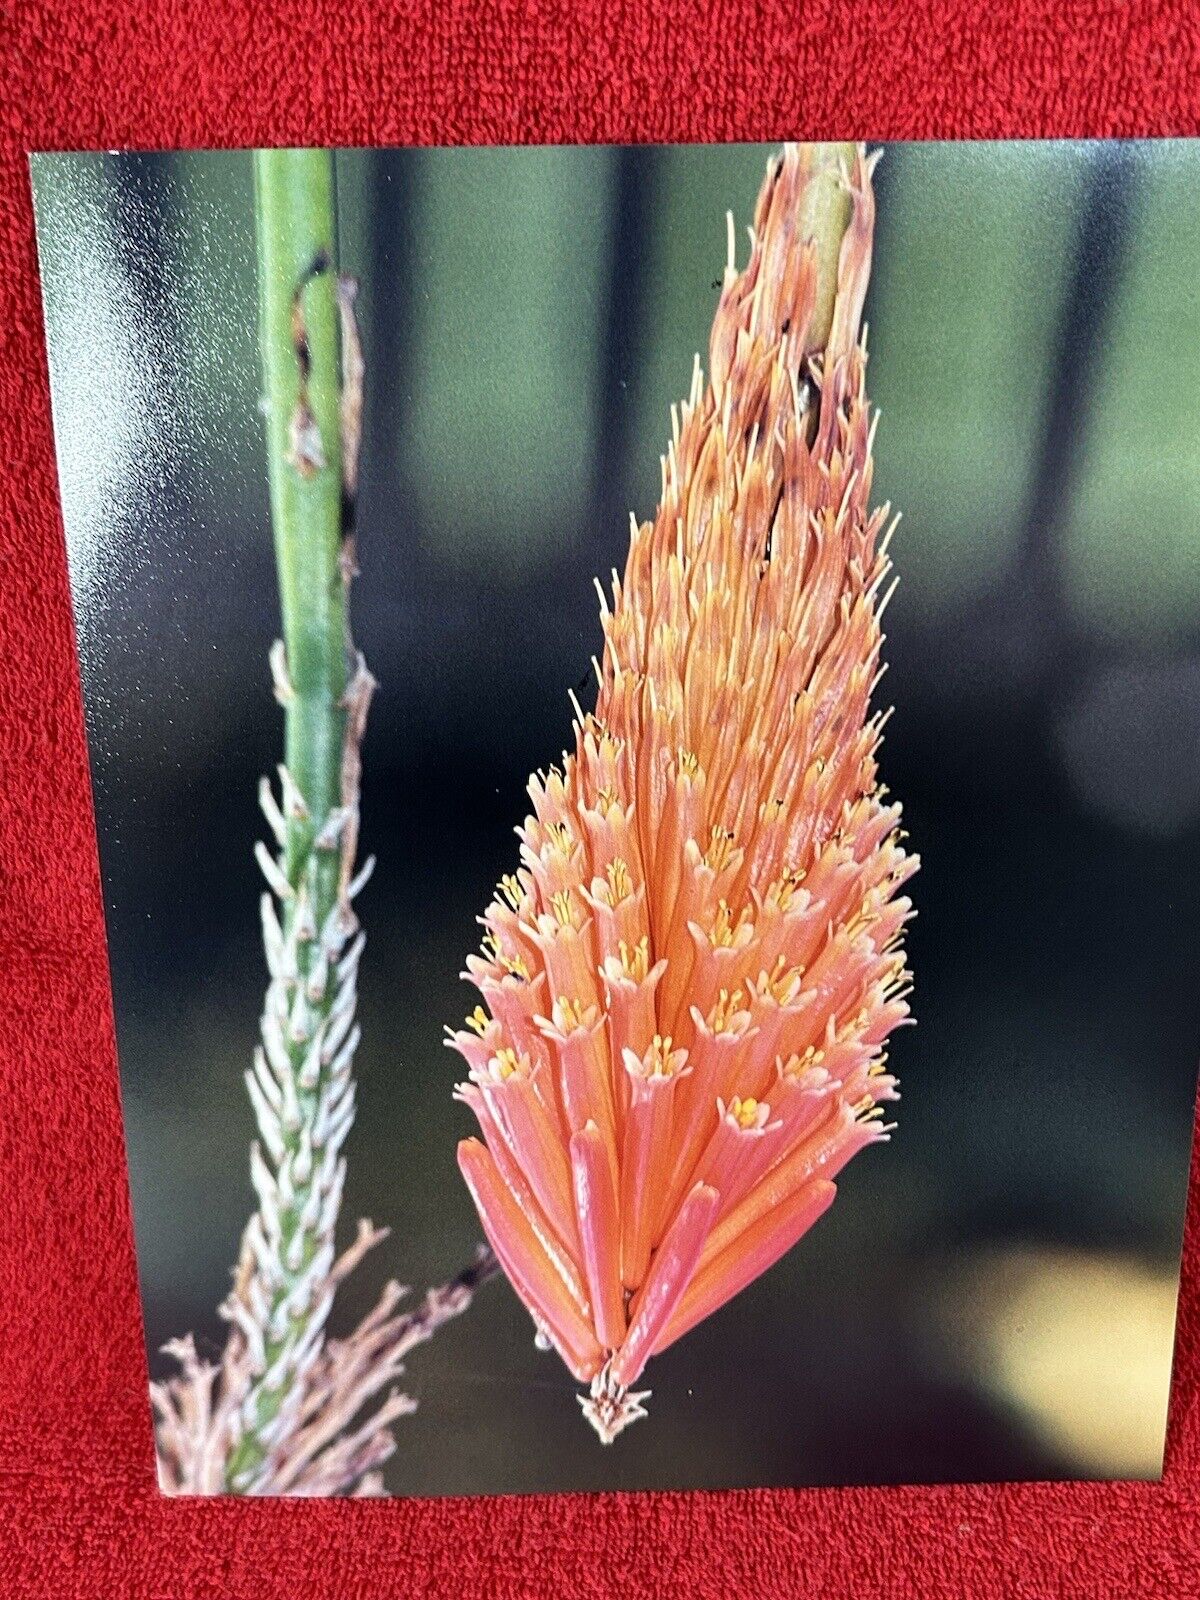 Aloe Bushwacker 8 x 10 High quality color photo Plant Flower